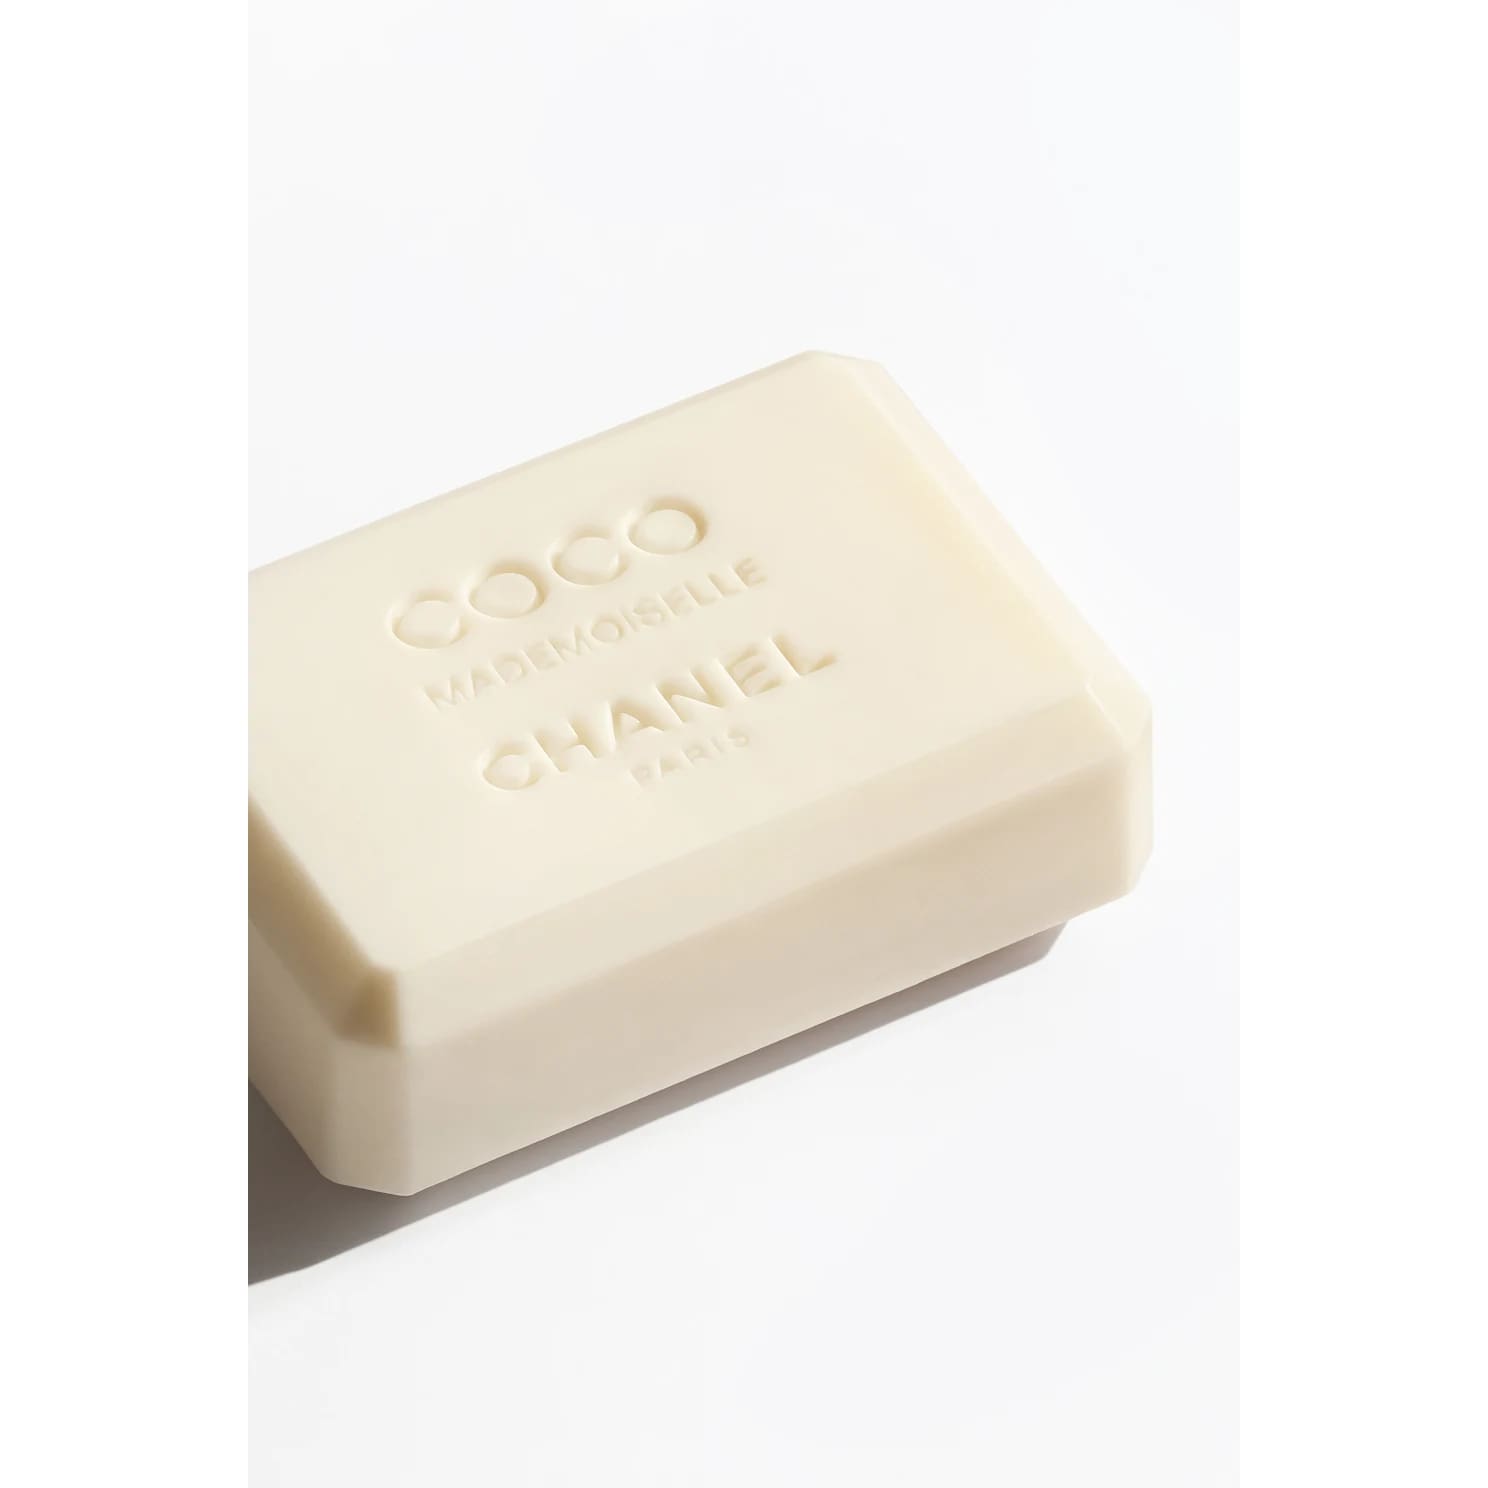 Chanel Coco Mademoiselle Soap Bar 150g